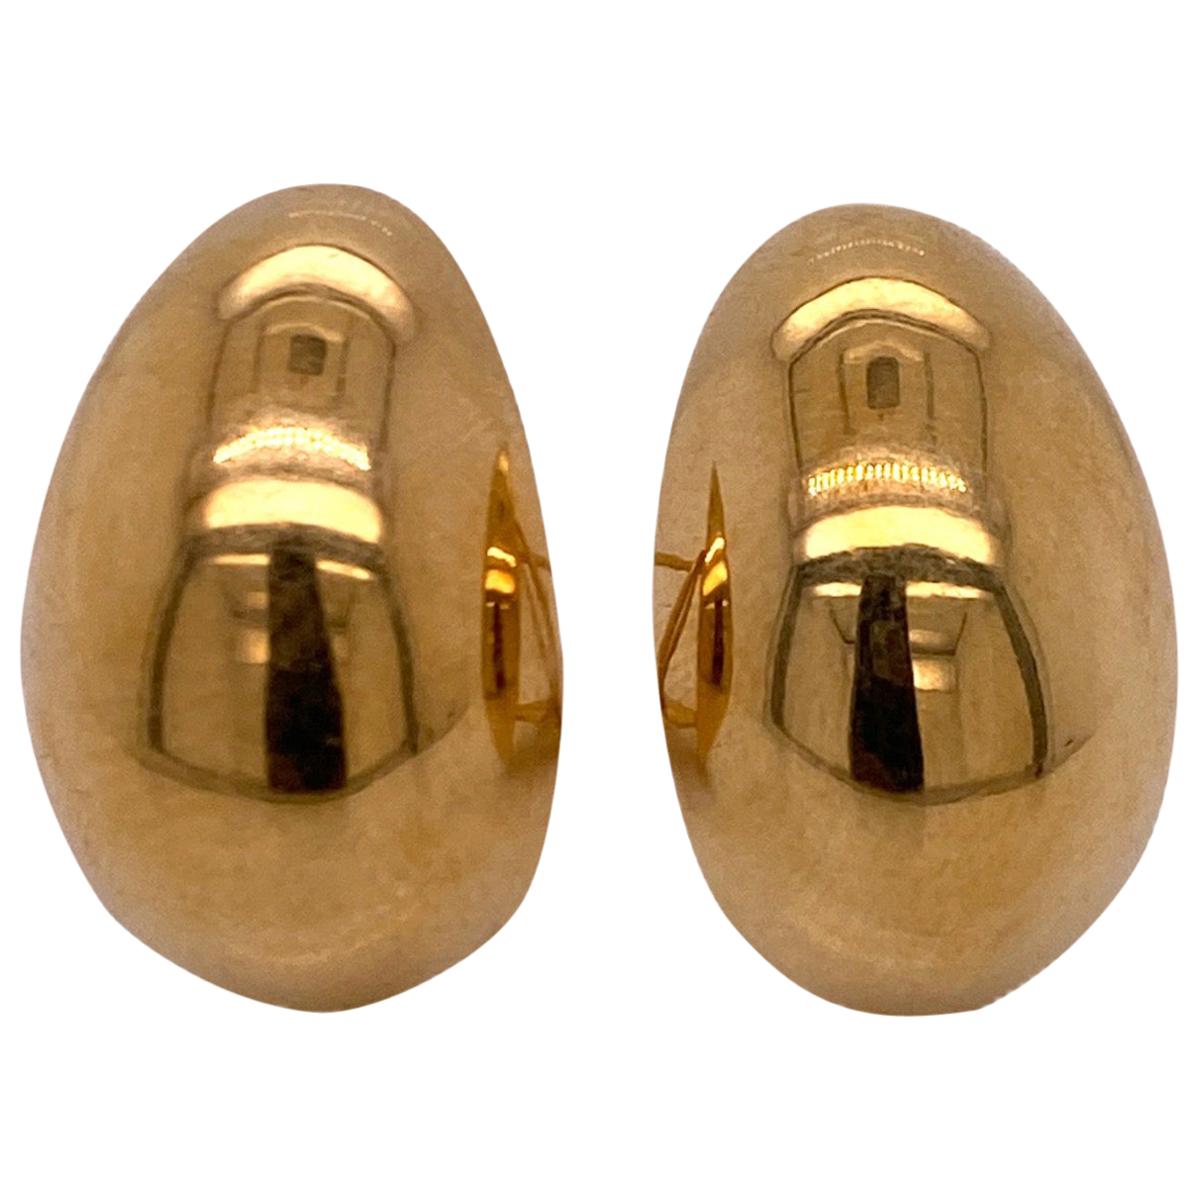 18 Karat Yellow Gold Hollow Kidney Bean Lever Back Earrings